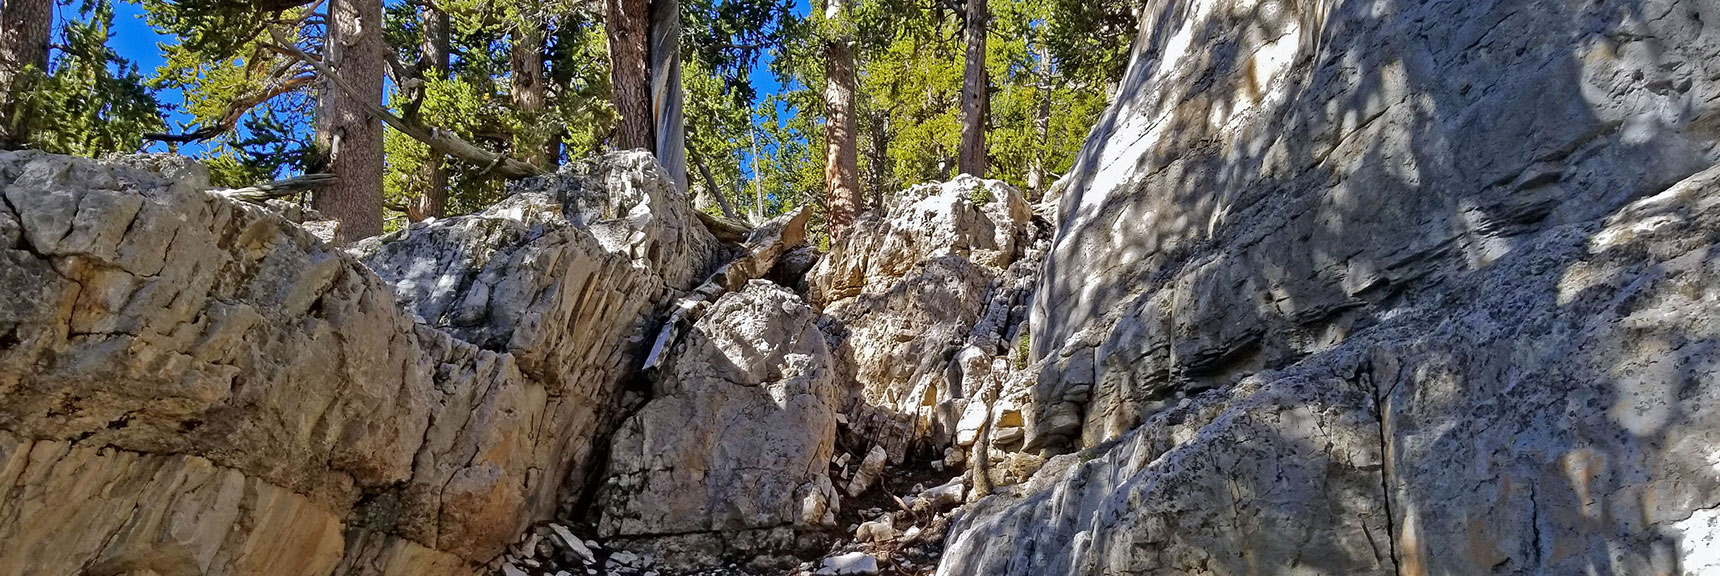 Fairly Easy 15ft Class 3 Scramble At Low Point in Ledge. | Grand Circuit Loop Cougar Ridge Trail, Mummy Mountain Knees | Mummy Mountain Toe | Mummy Springs | Raintree | Fletcher Peak | Mt Charleston Wilderness | Spring Mountains, Nevada